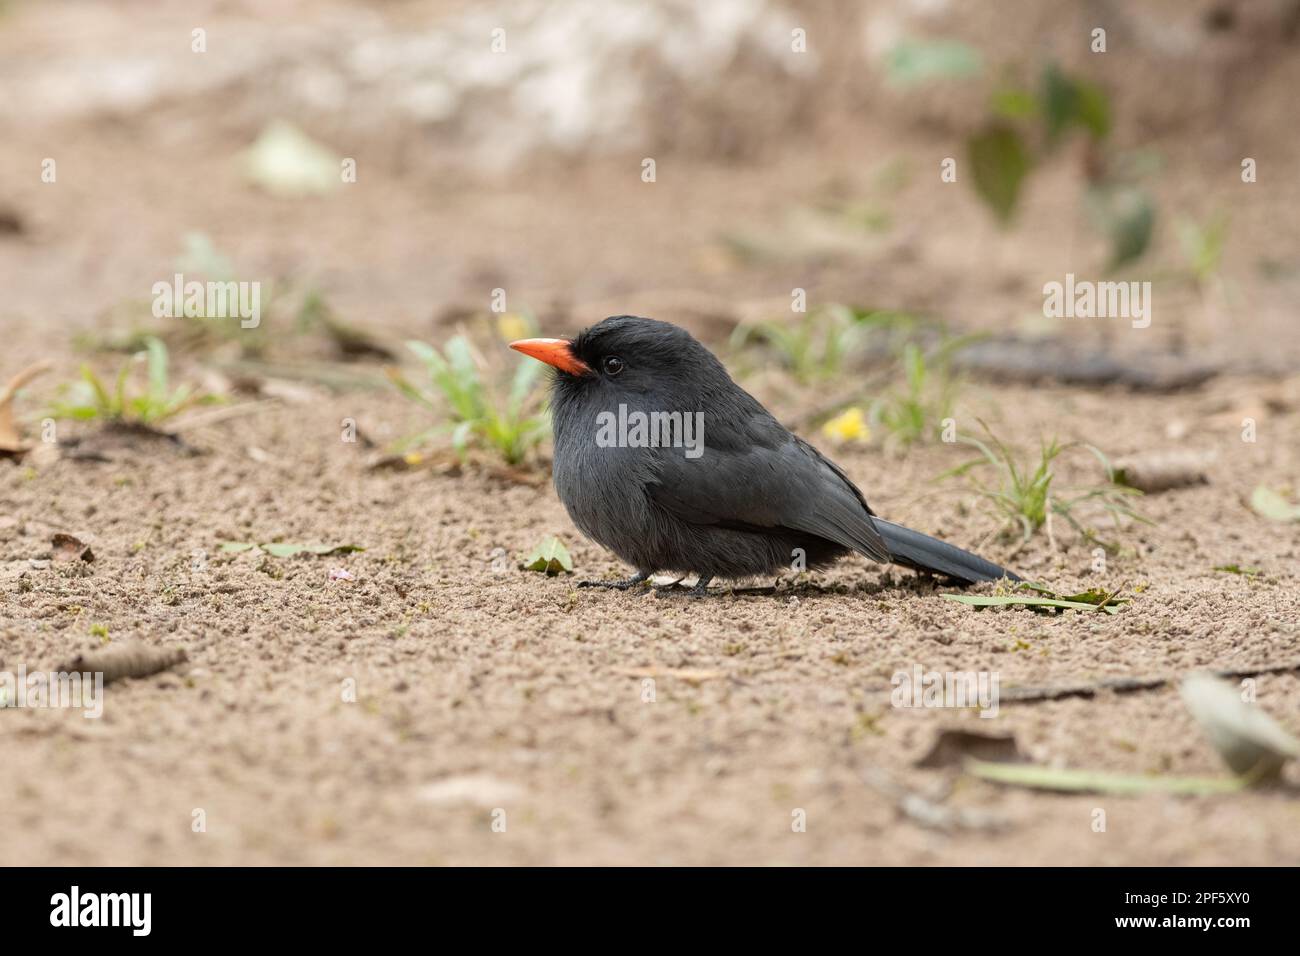 A Black-fronted Nunbird (Monasa nigrifrons) on the ground, North Pantanal, Brazil Stock Photo